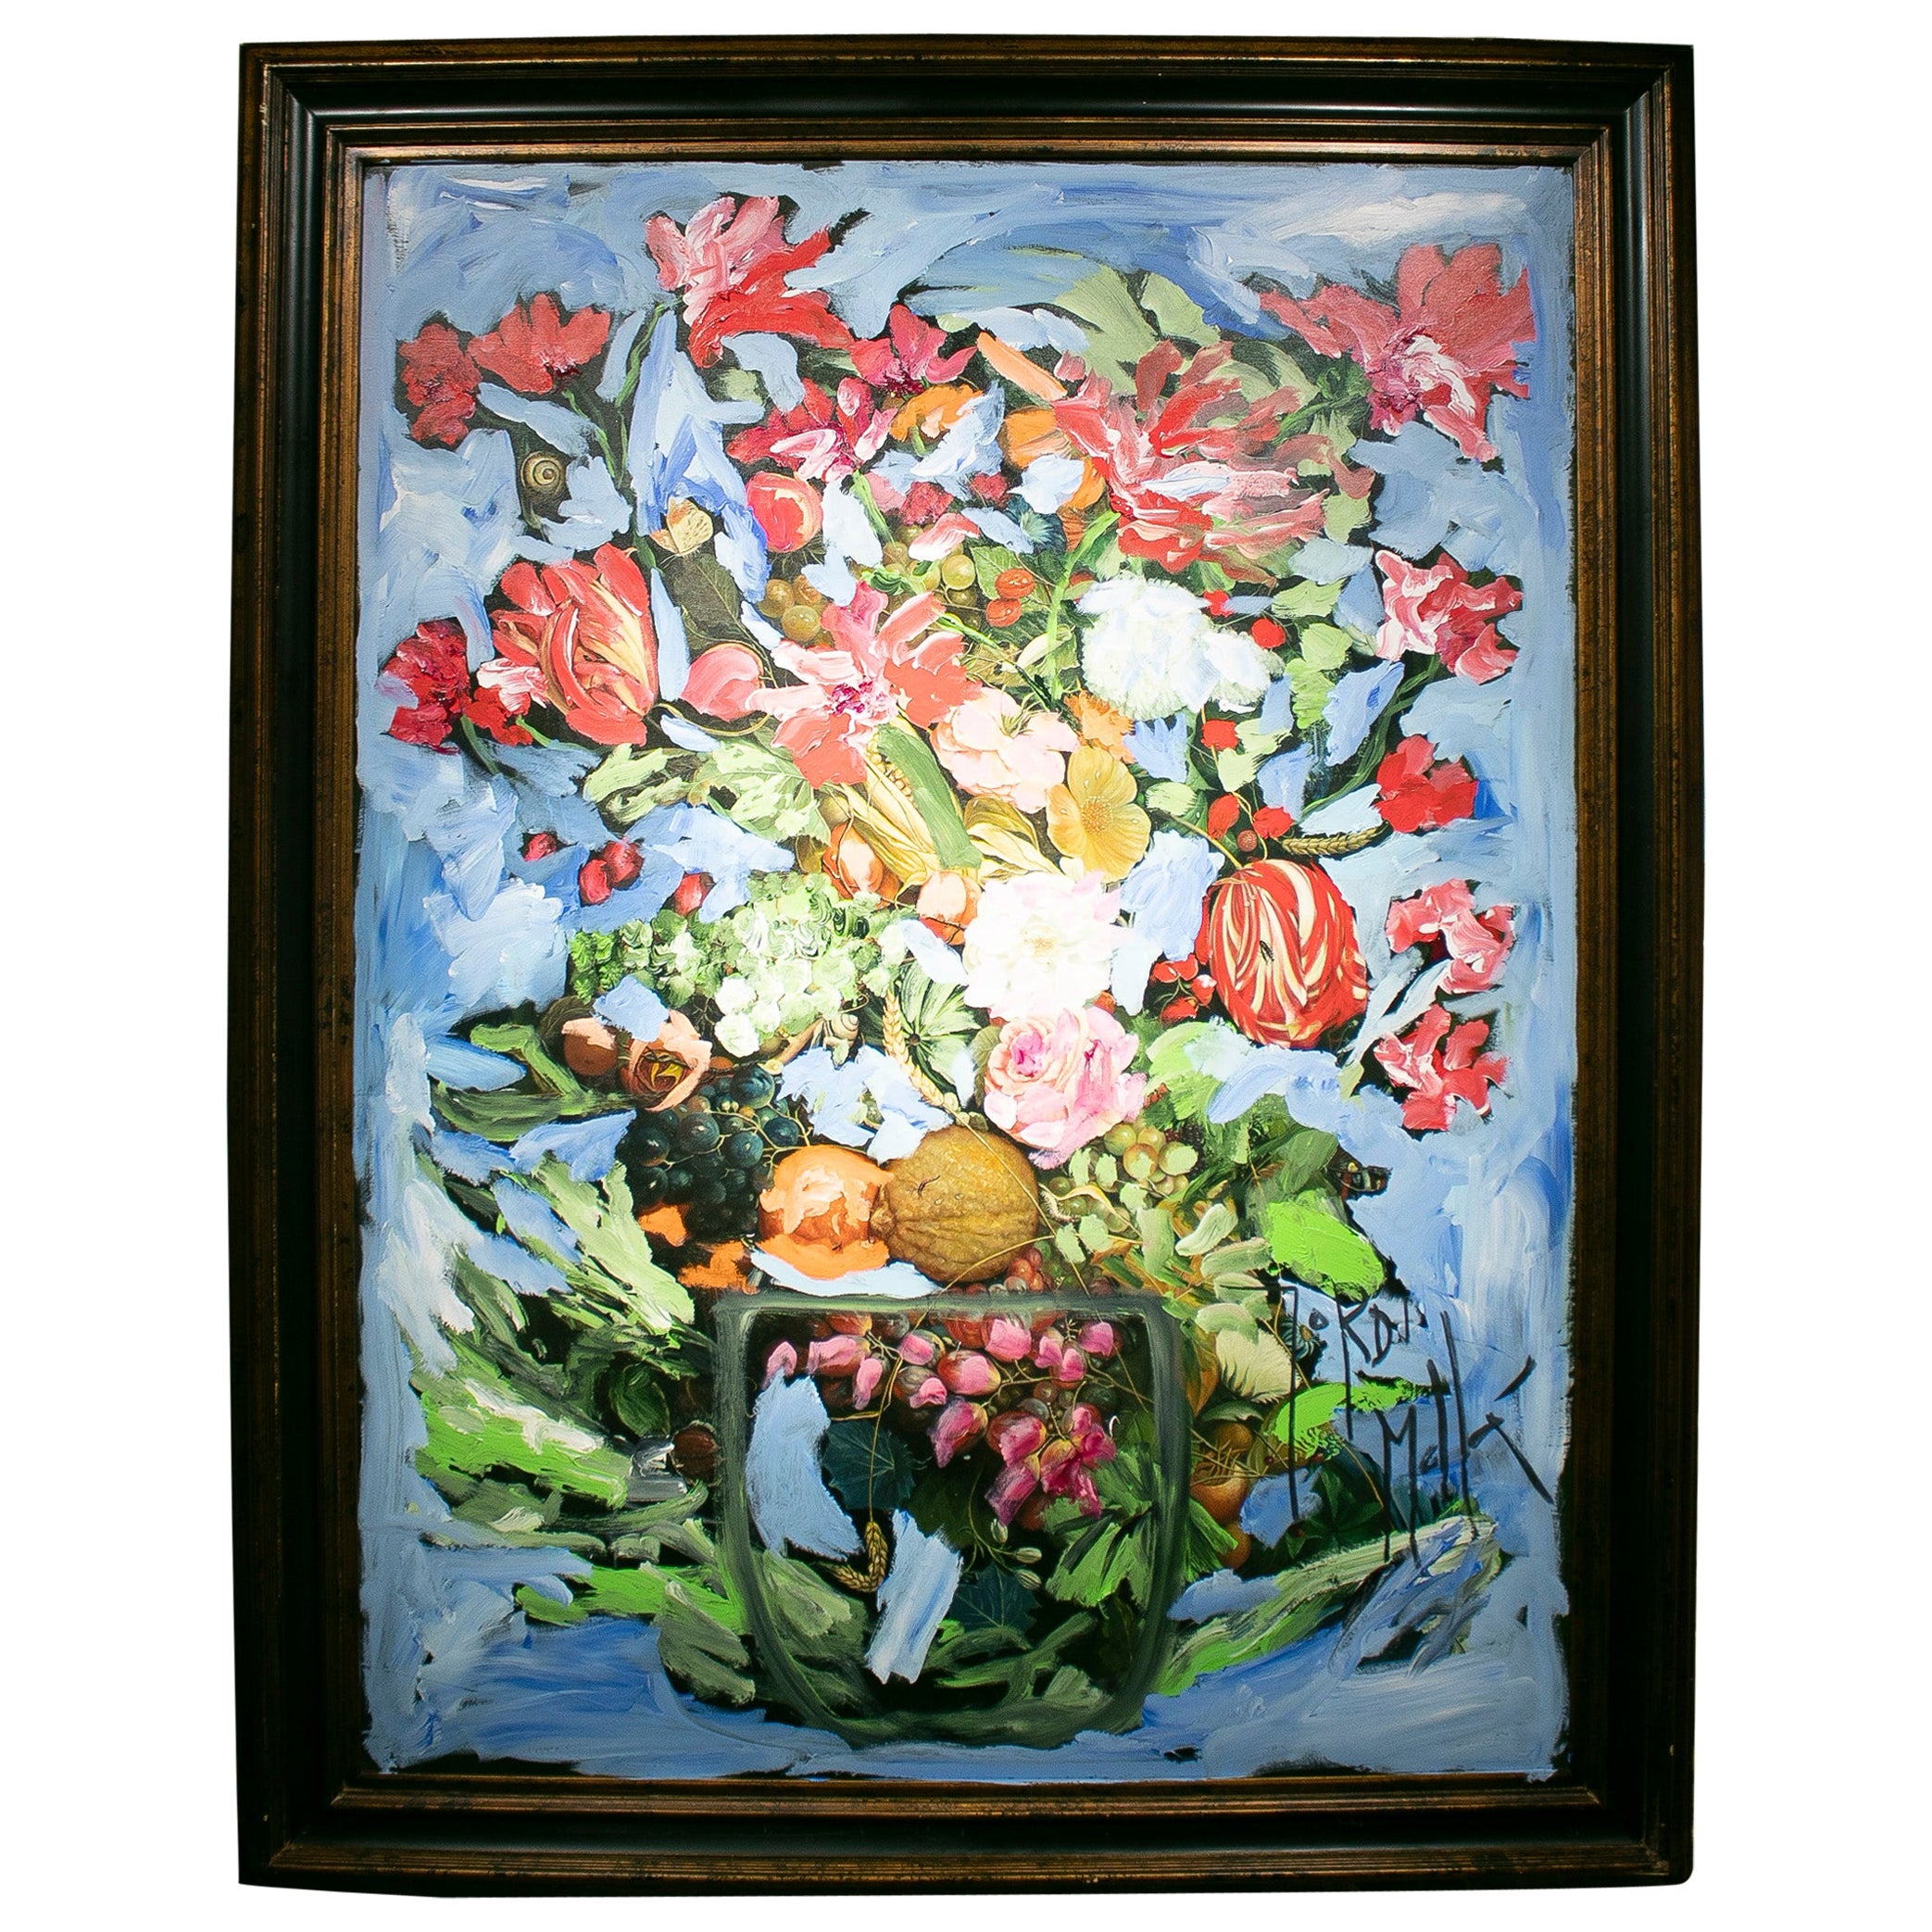 Jordi Mollá, 2021 "Flower Power" Marbella Series Oil Painting For Sale